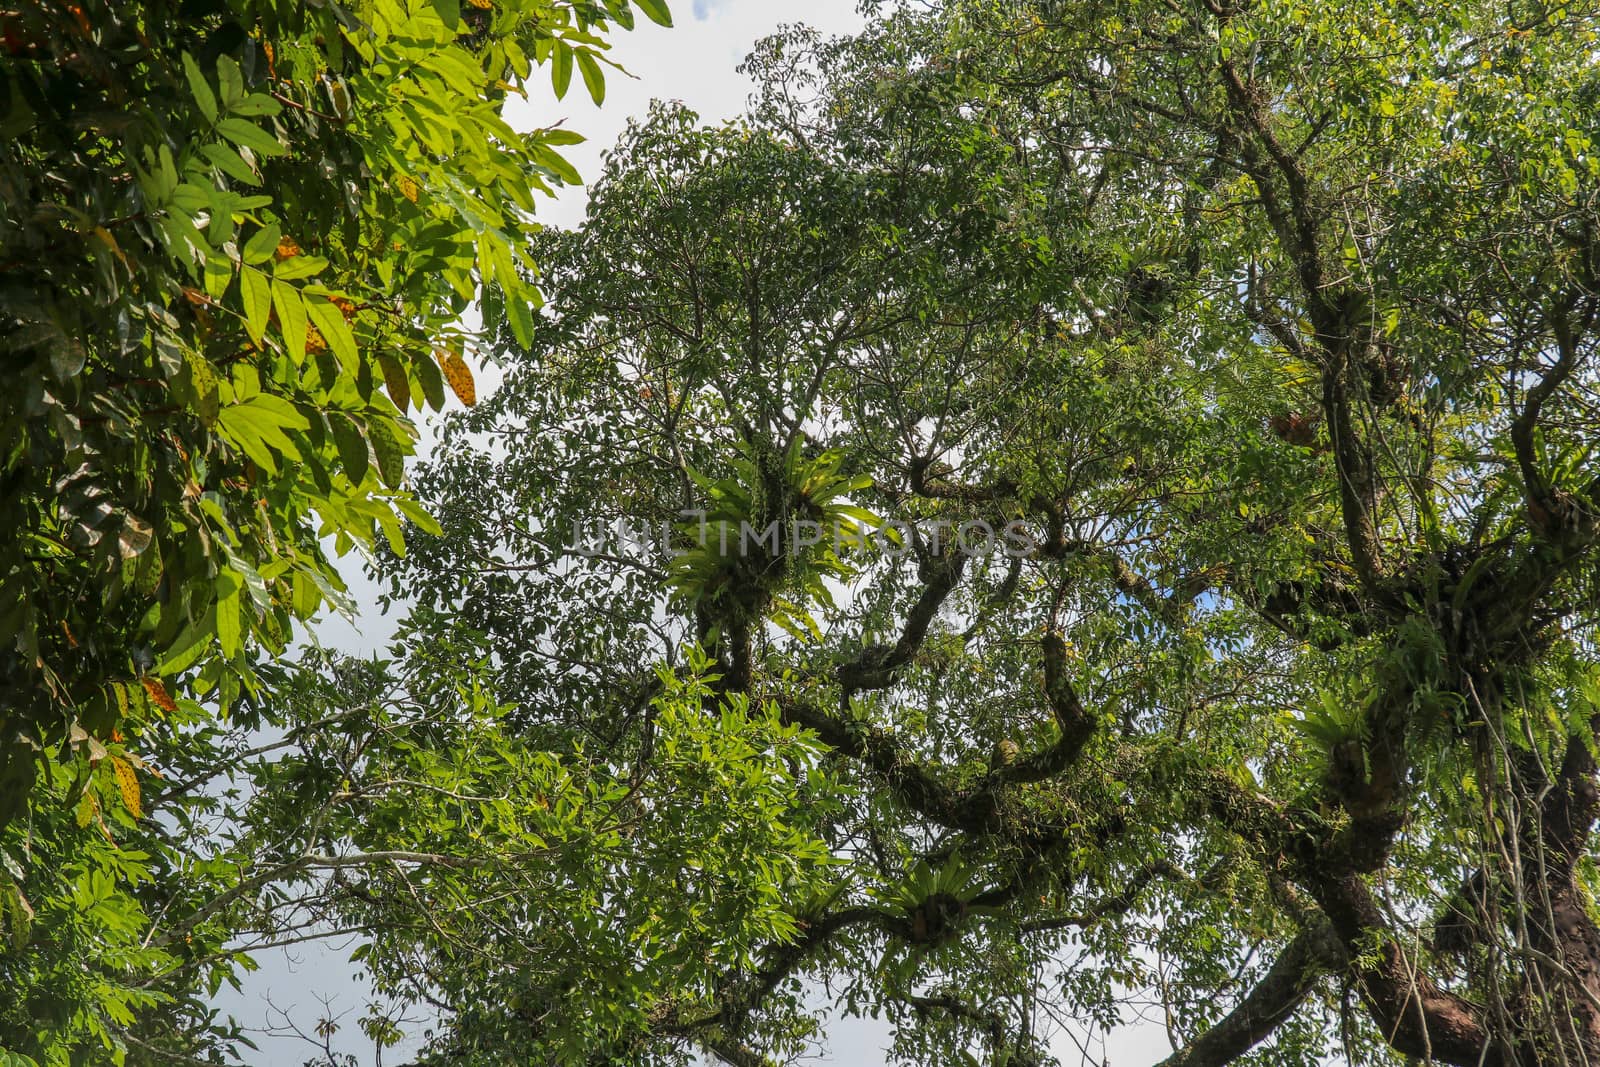 Asplenium Nidus parasites on branches in the crown of a huge tropical tree. Green leaves of Asplenium nidus. Bird's Nest Fern is an epiphytic species of fern in the family Aspleniaceae.